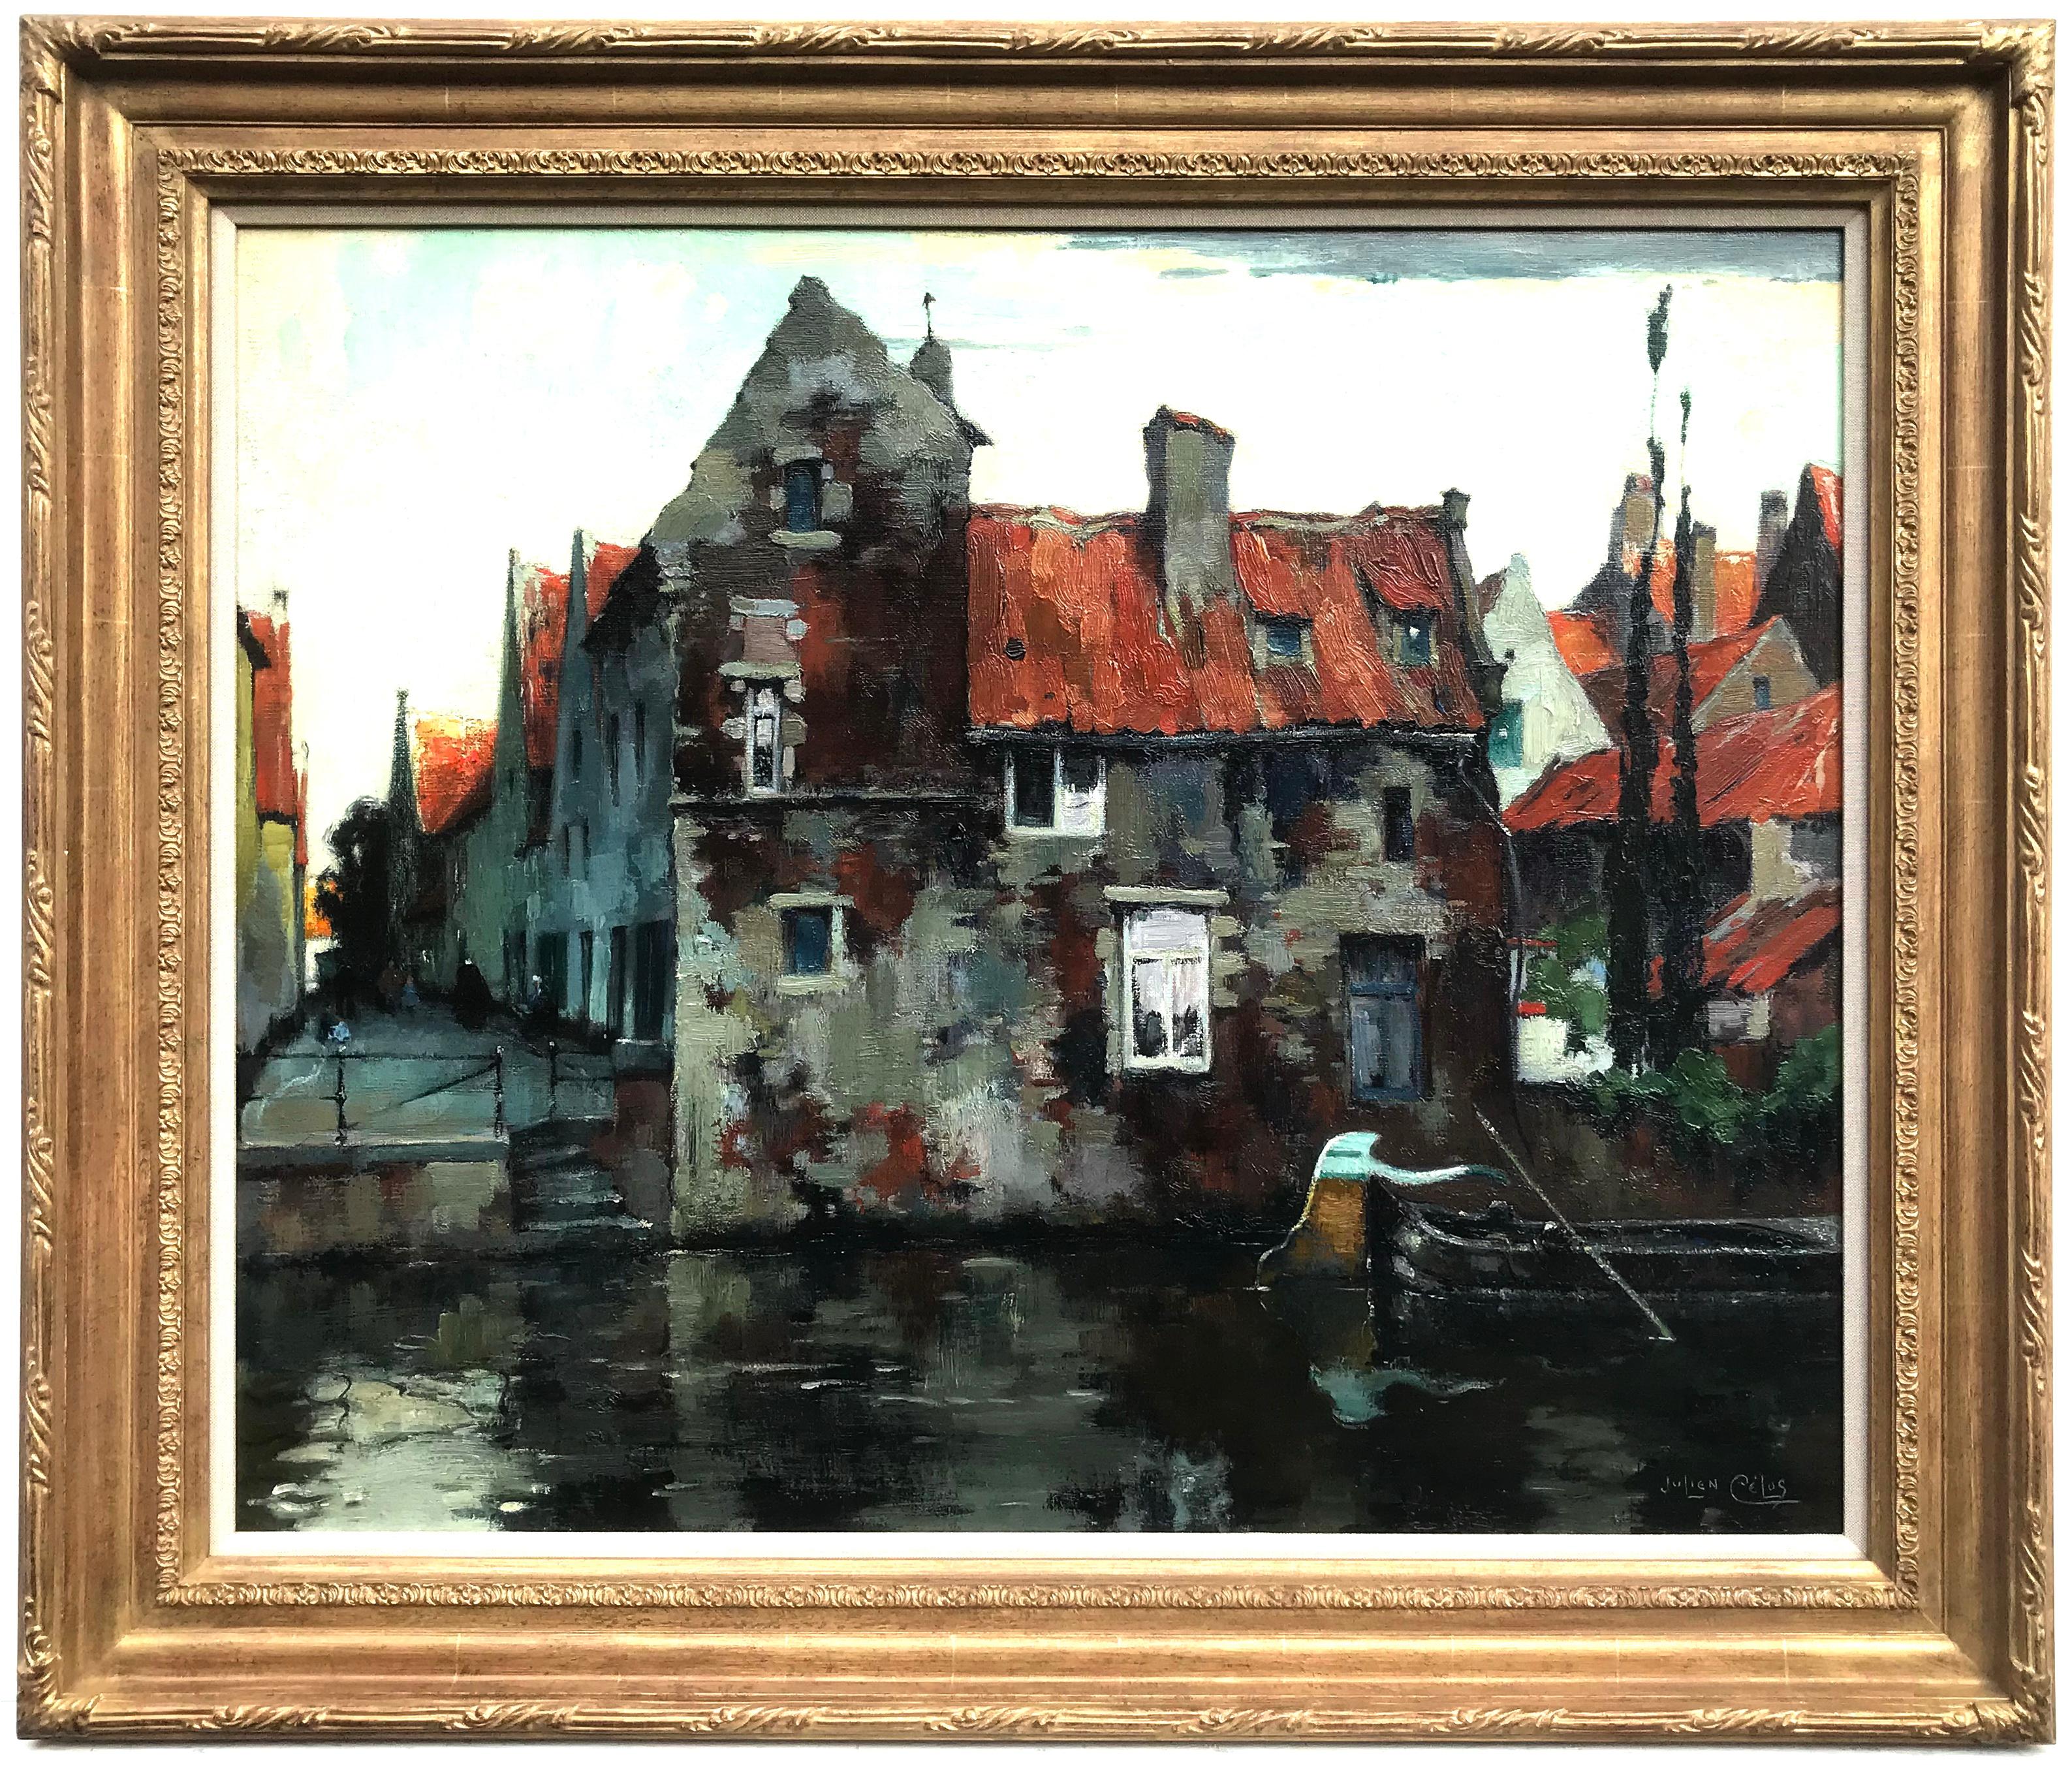 Julien Celos Landscape Painting - Bruges Canal Scene, Oil on Canvas Painting